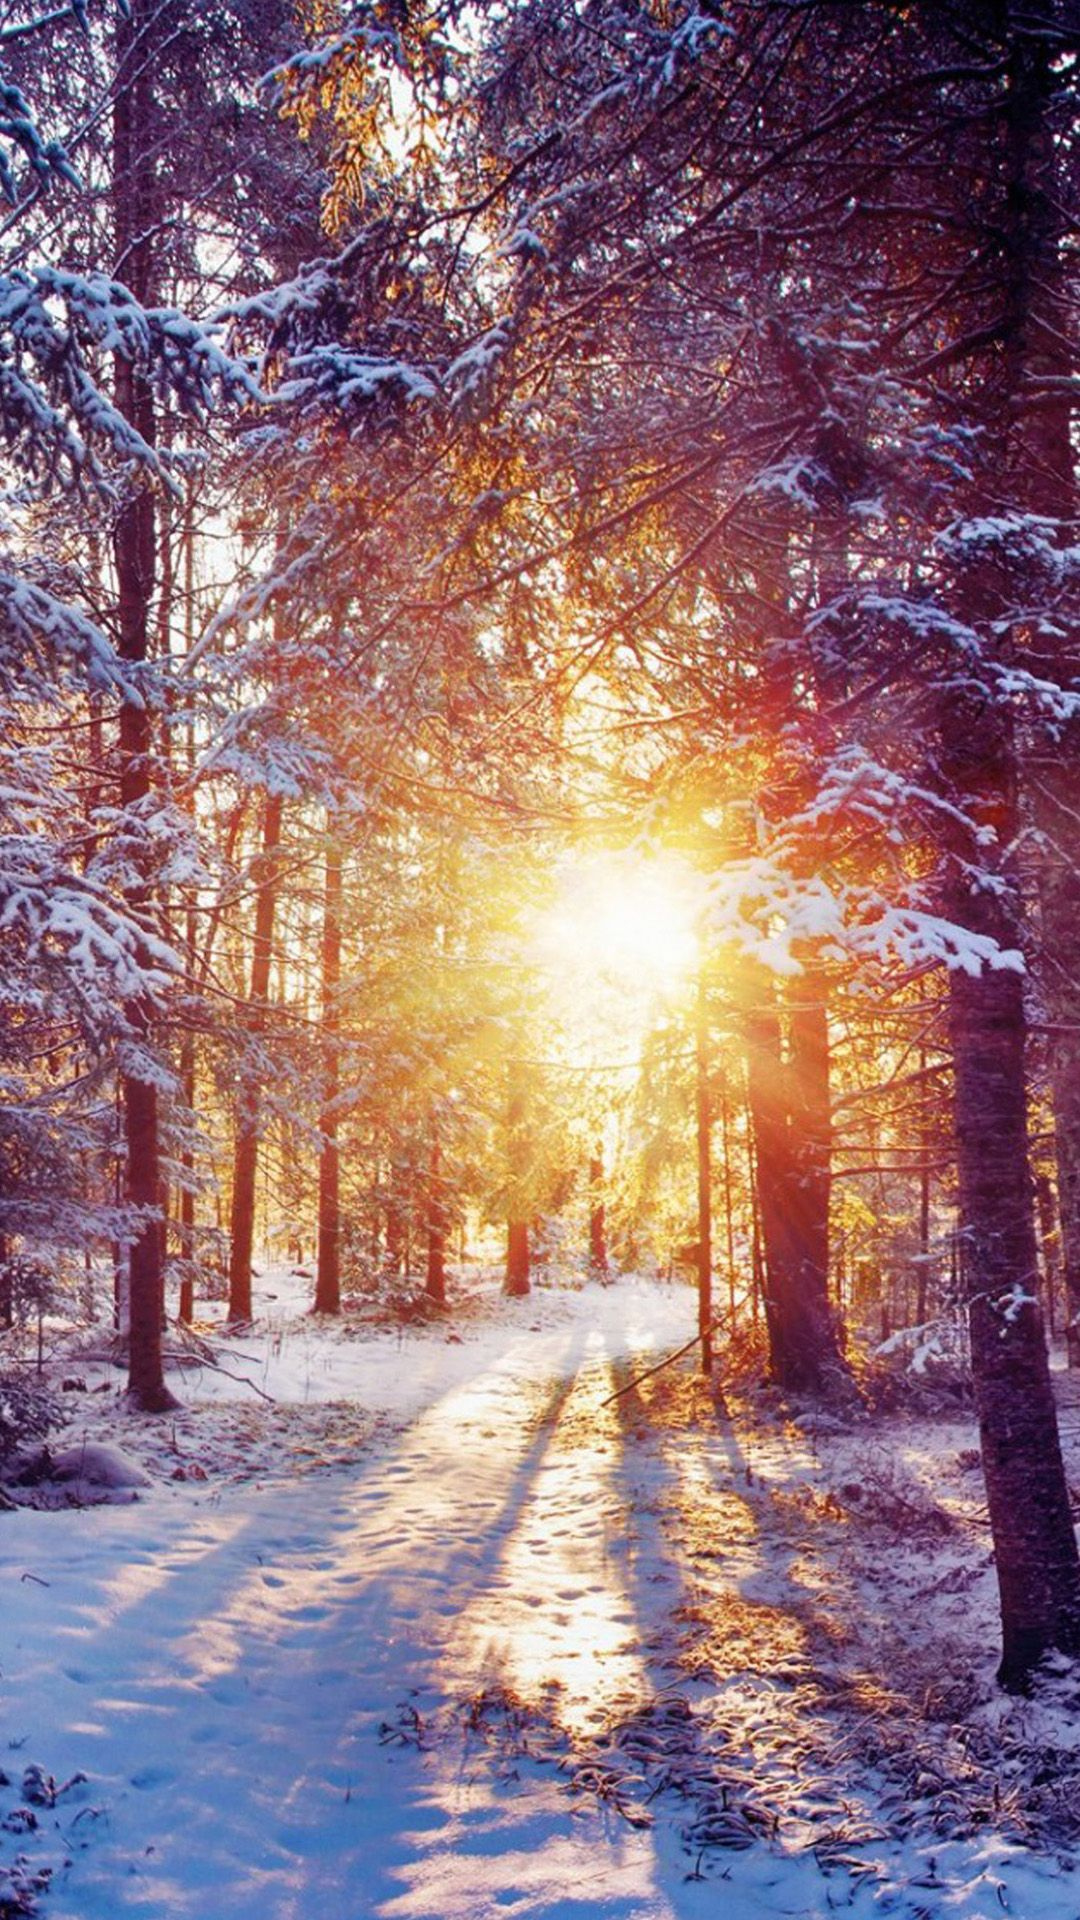 1080x1920 Winter Forest Dawn Landscape iPhone 6 Wallpaper Download | iPhone Wallpapers, iPad wa&acirc;&#128;&brvbar; | Iphone wallpaper winter, Landscape wallpaper, Beautiful landscape wallpaper